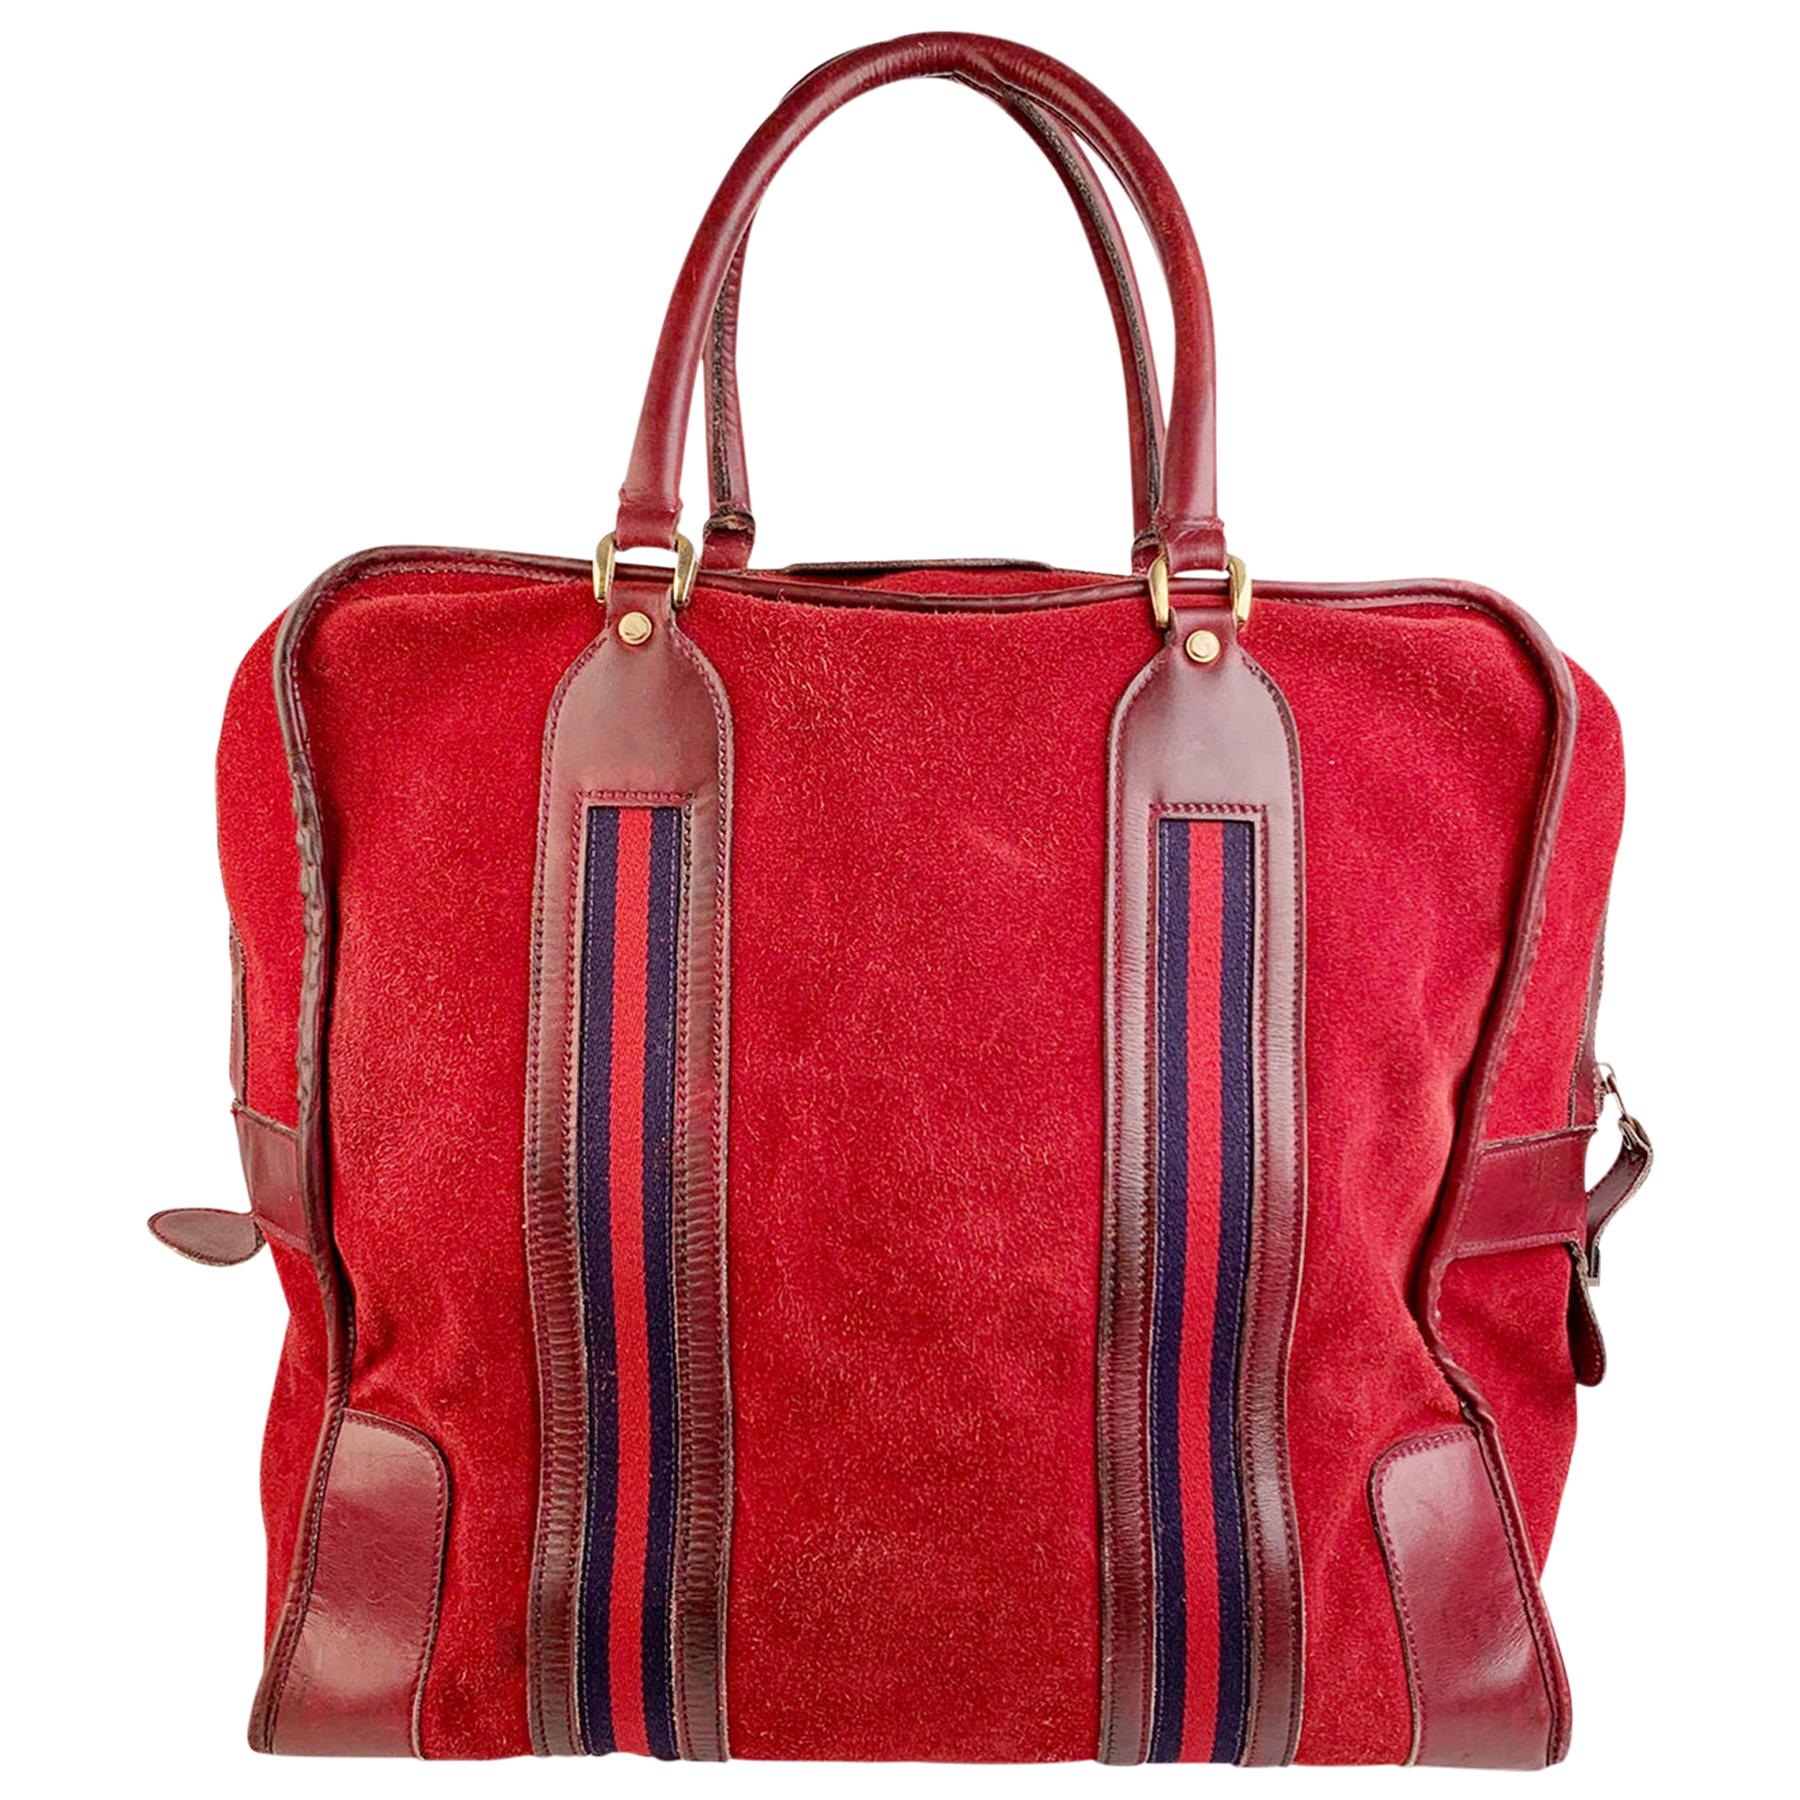 Gucci Vintage Red Suede Weekender Travel Bag with Stripes